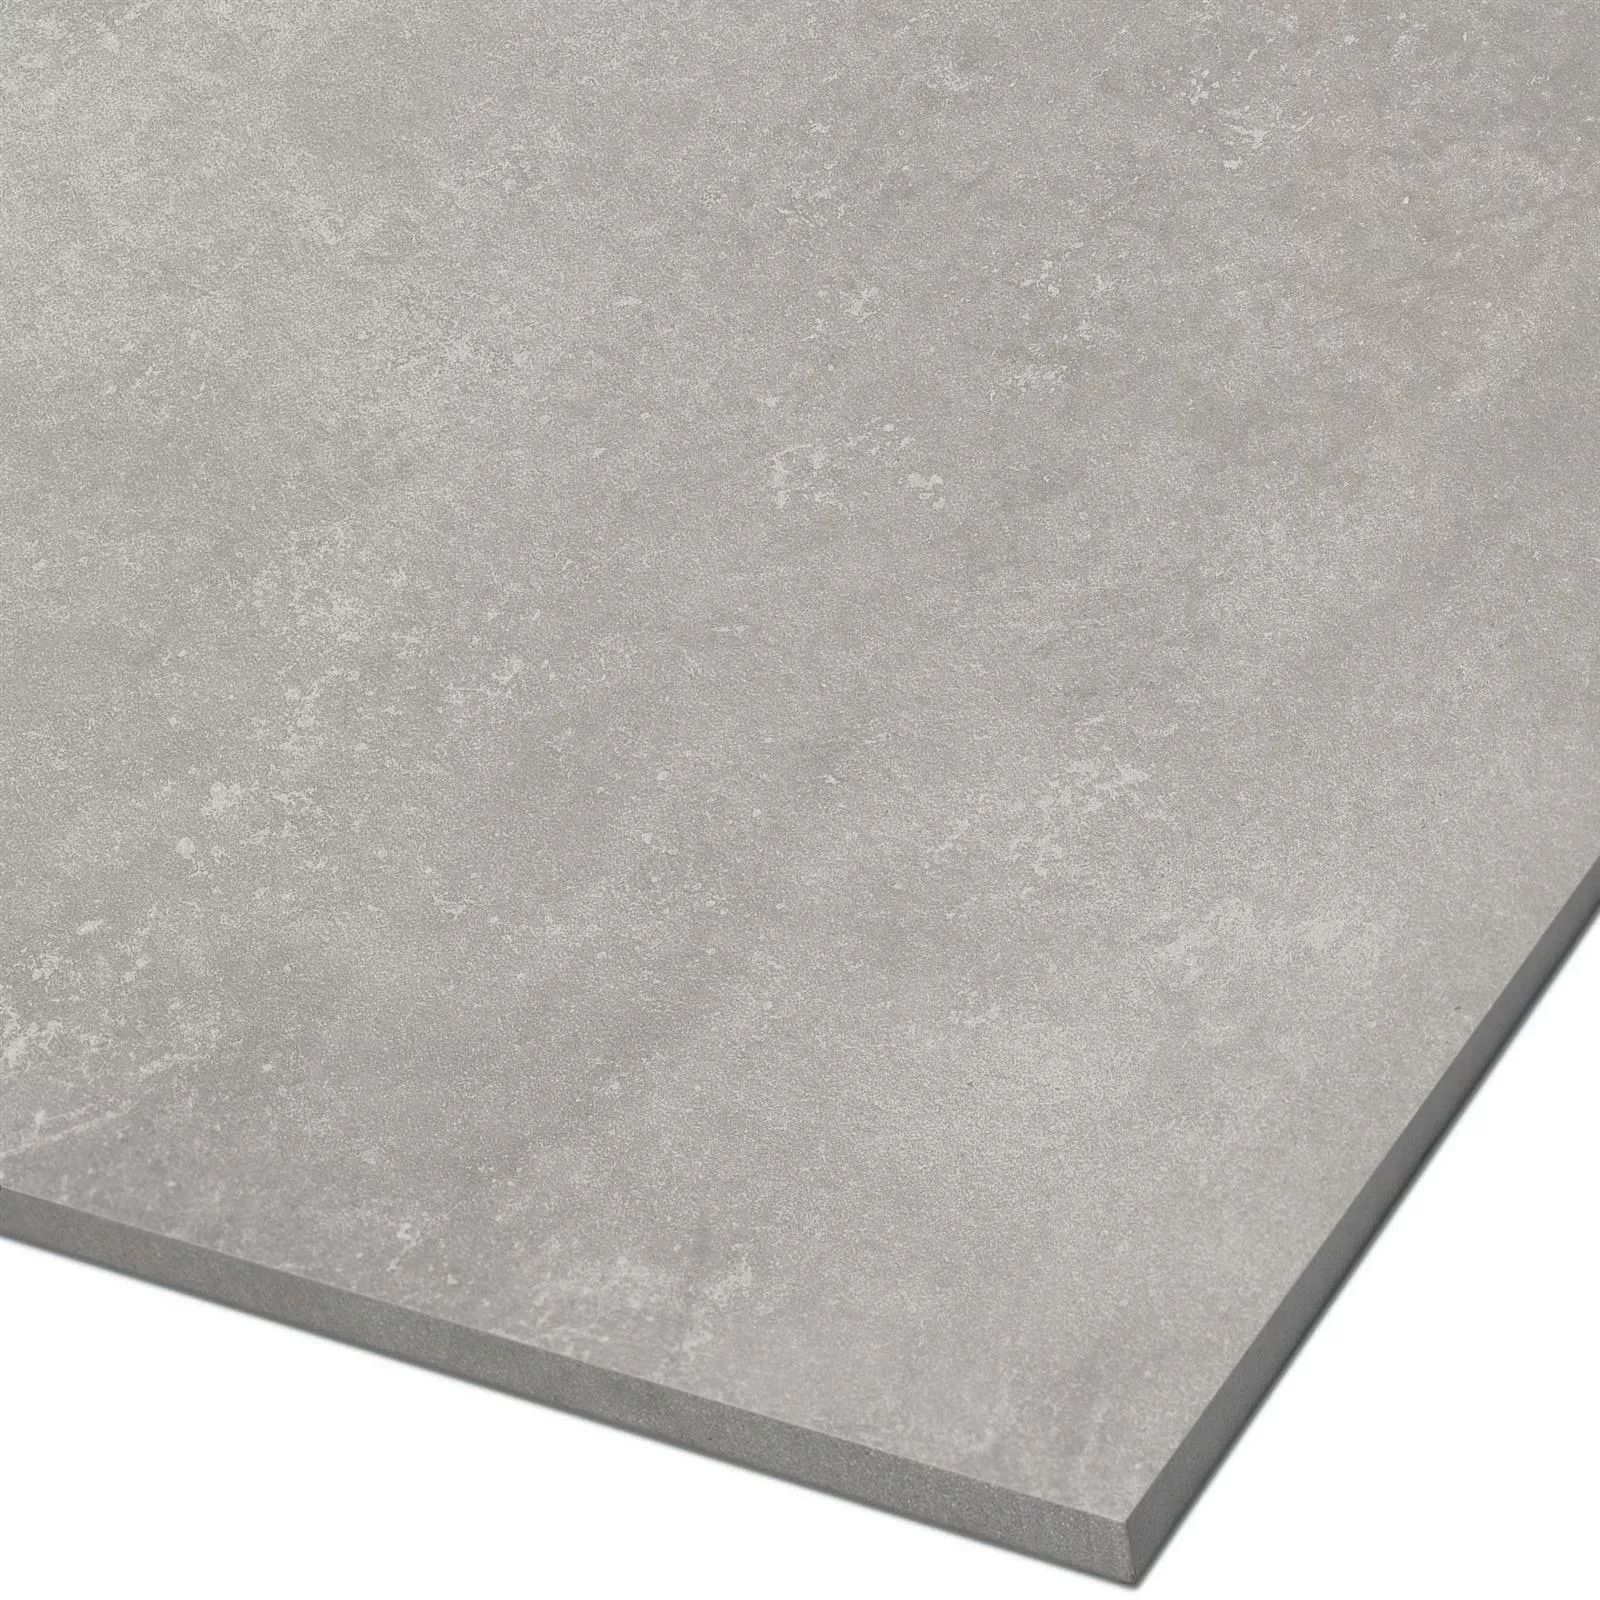 Sample Floor Tiles Cement Optic Nepal Slim Grey 100x100cm